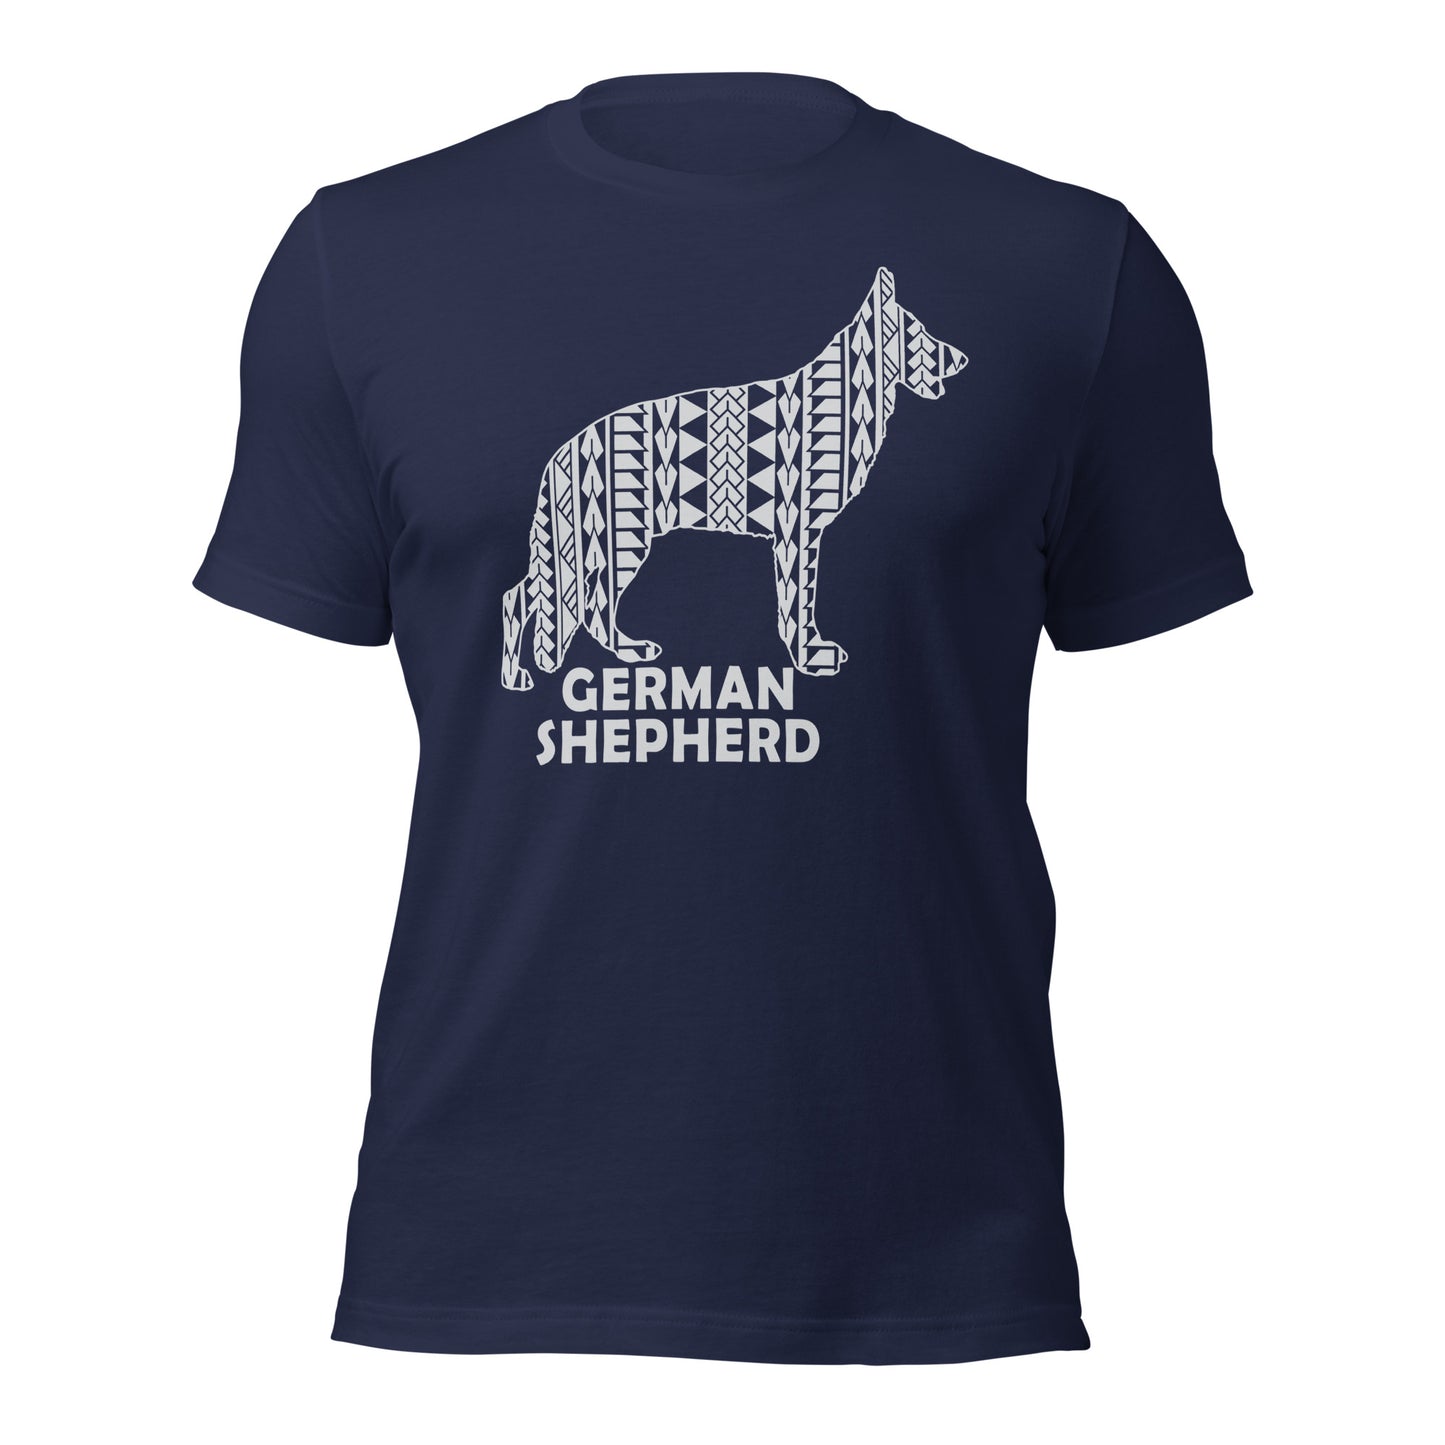 German Shepherd Polynesian t-shirt navy by Dog Artistry.